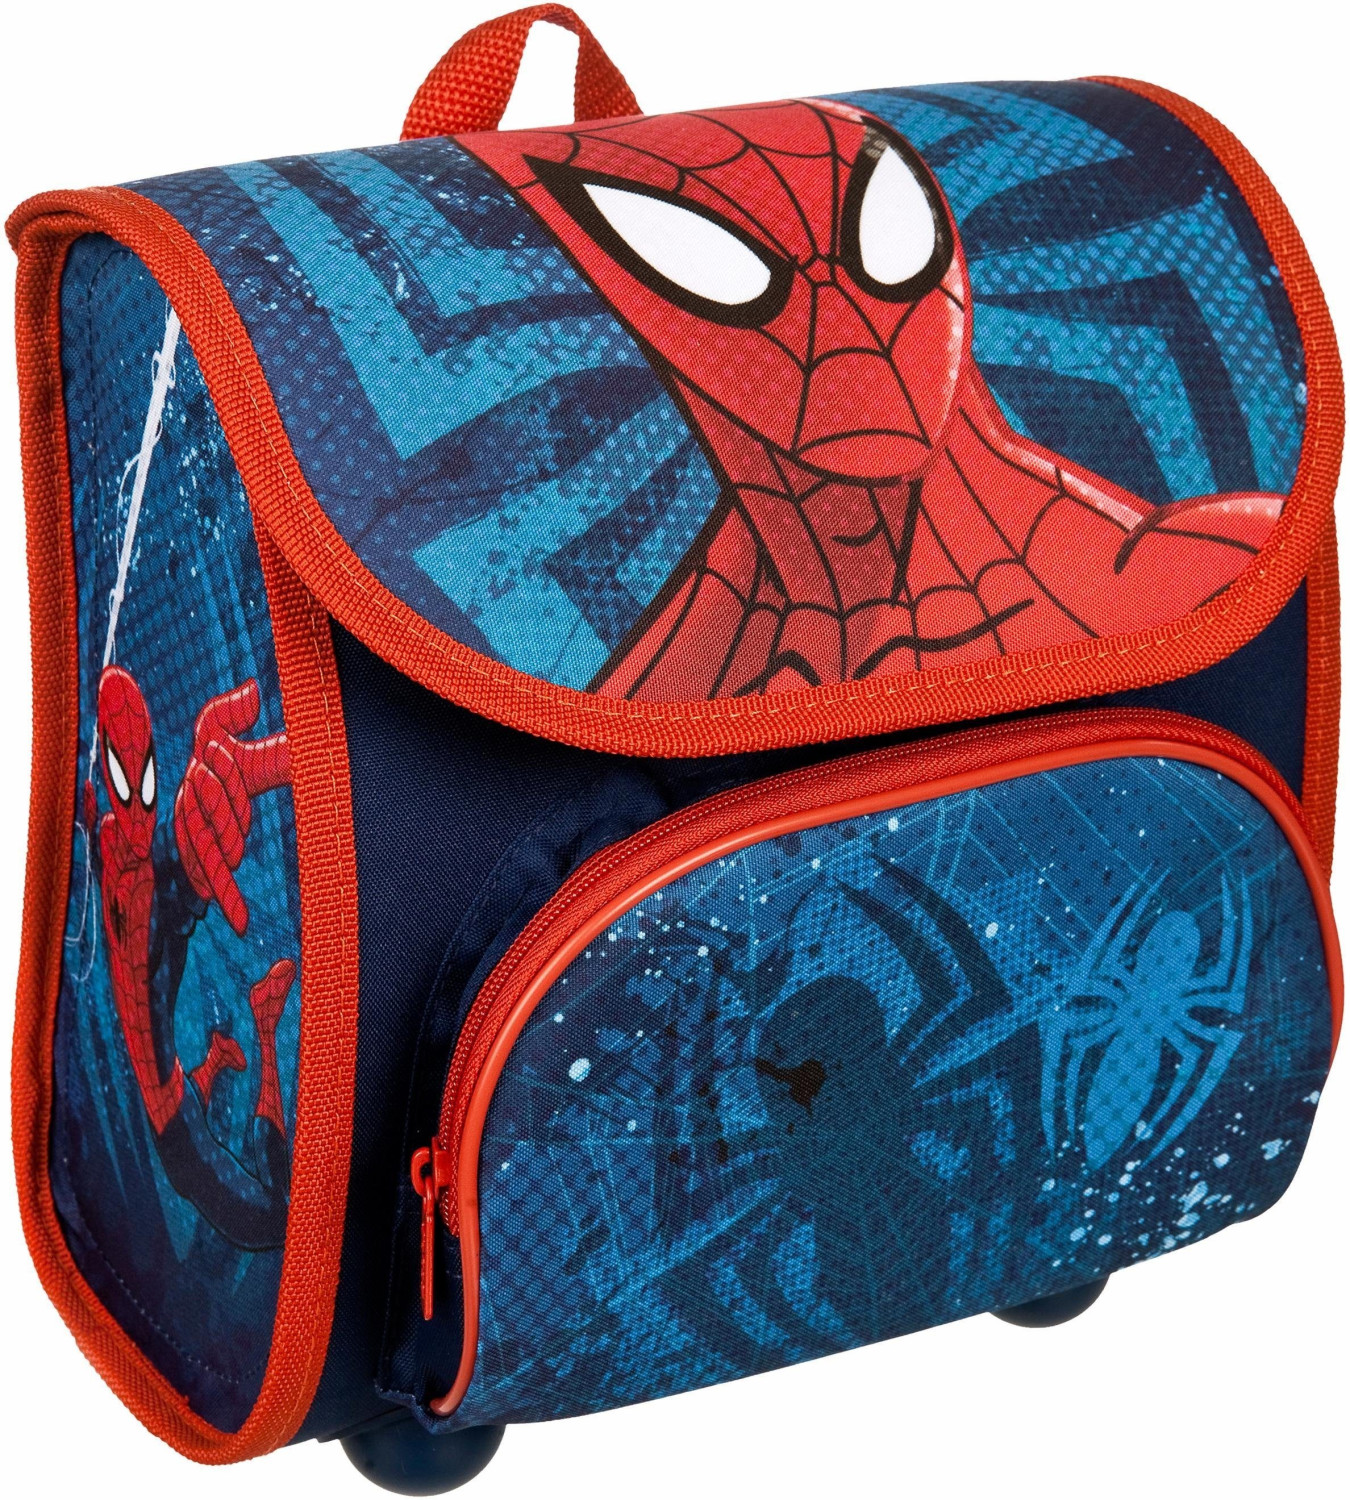 Undercover Scooli Preschool Bag Spiderman (SPJU8240)